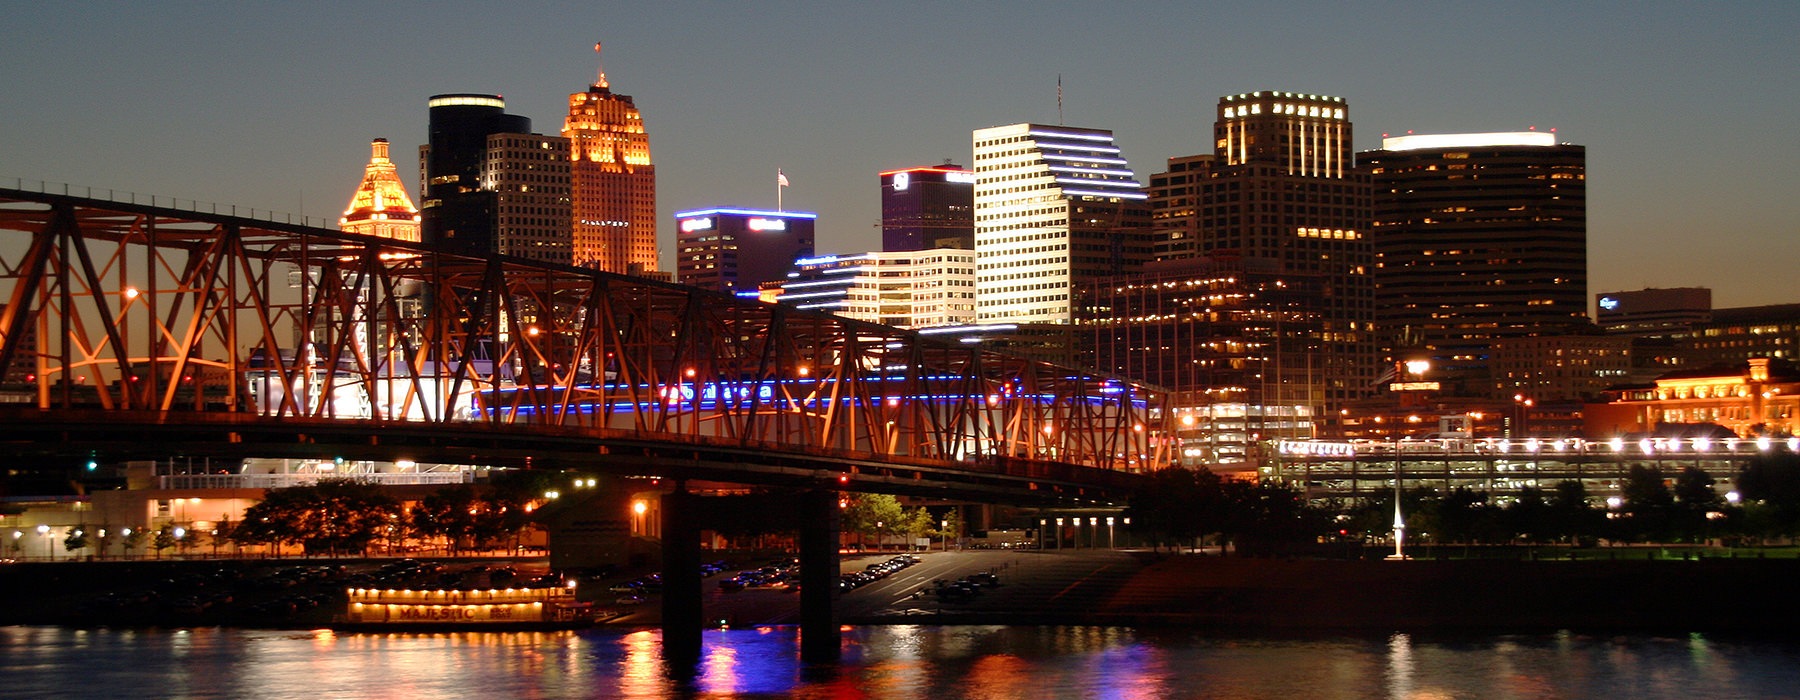 A nighttime landscape view of Cincinnati 